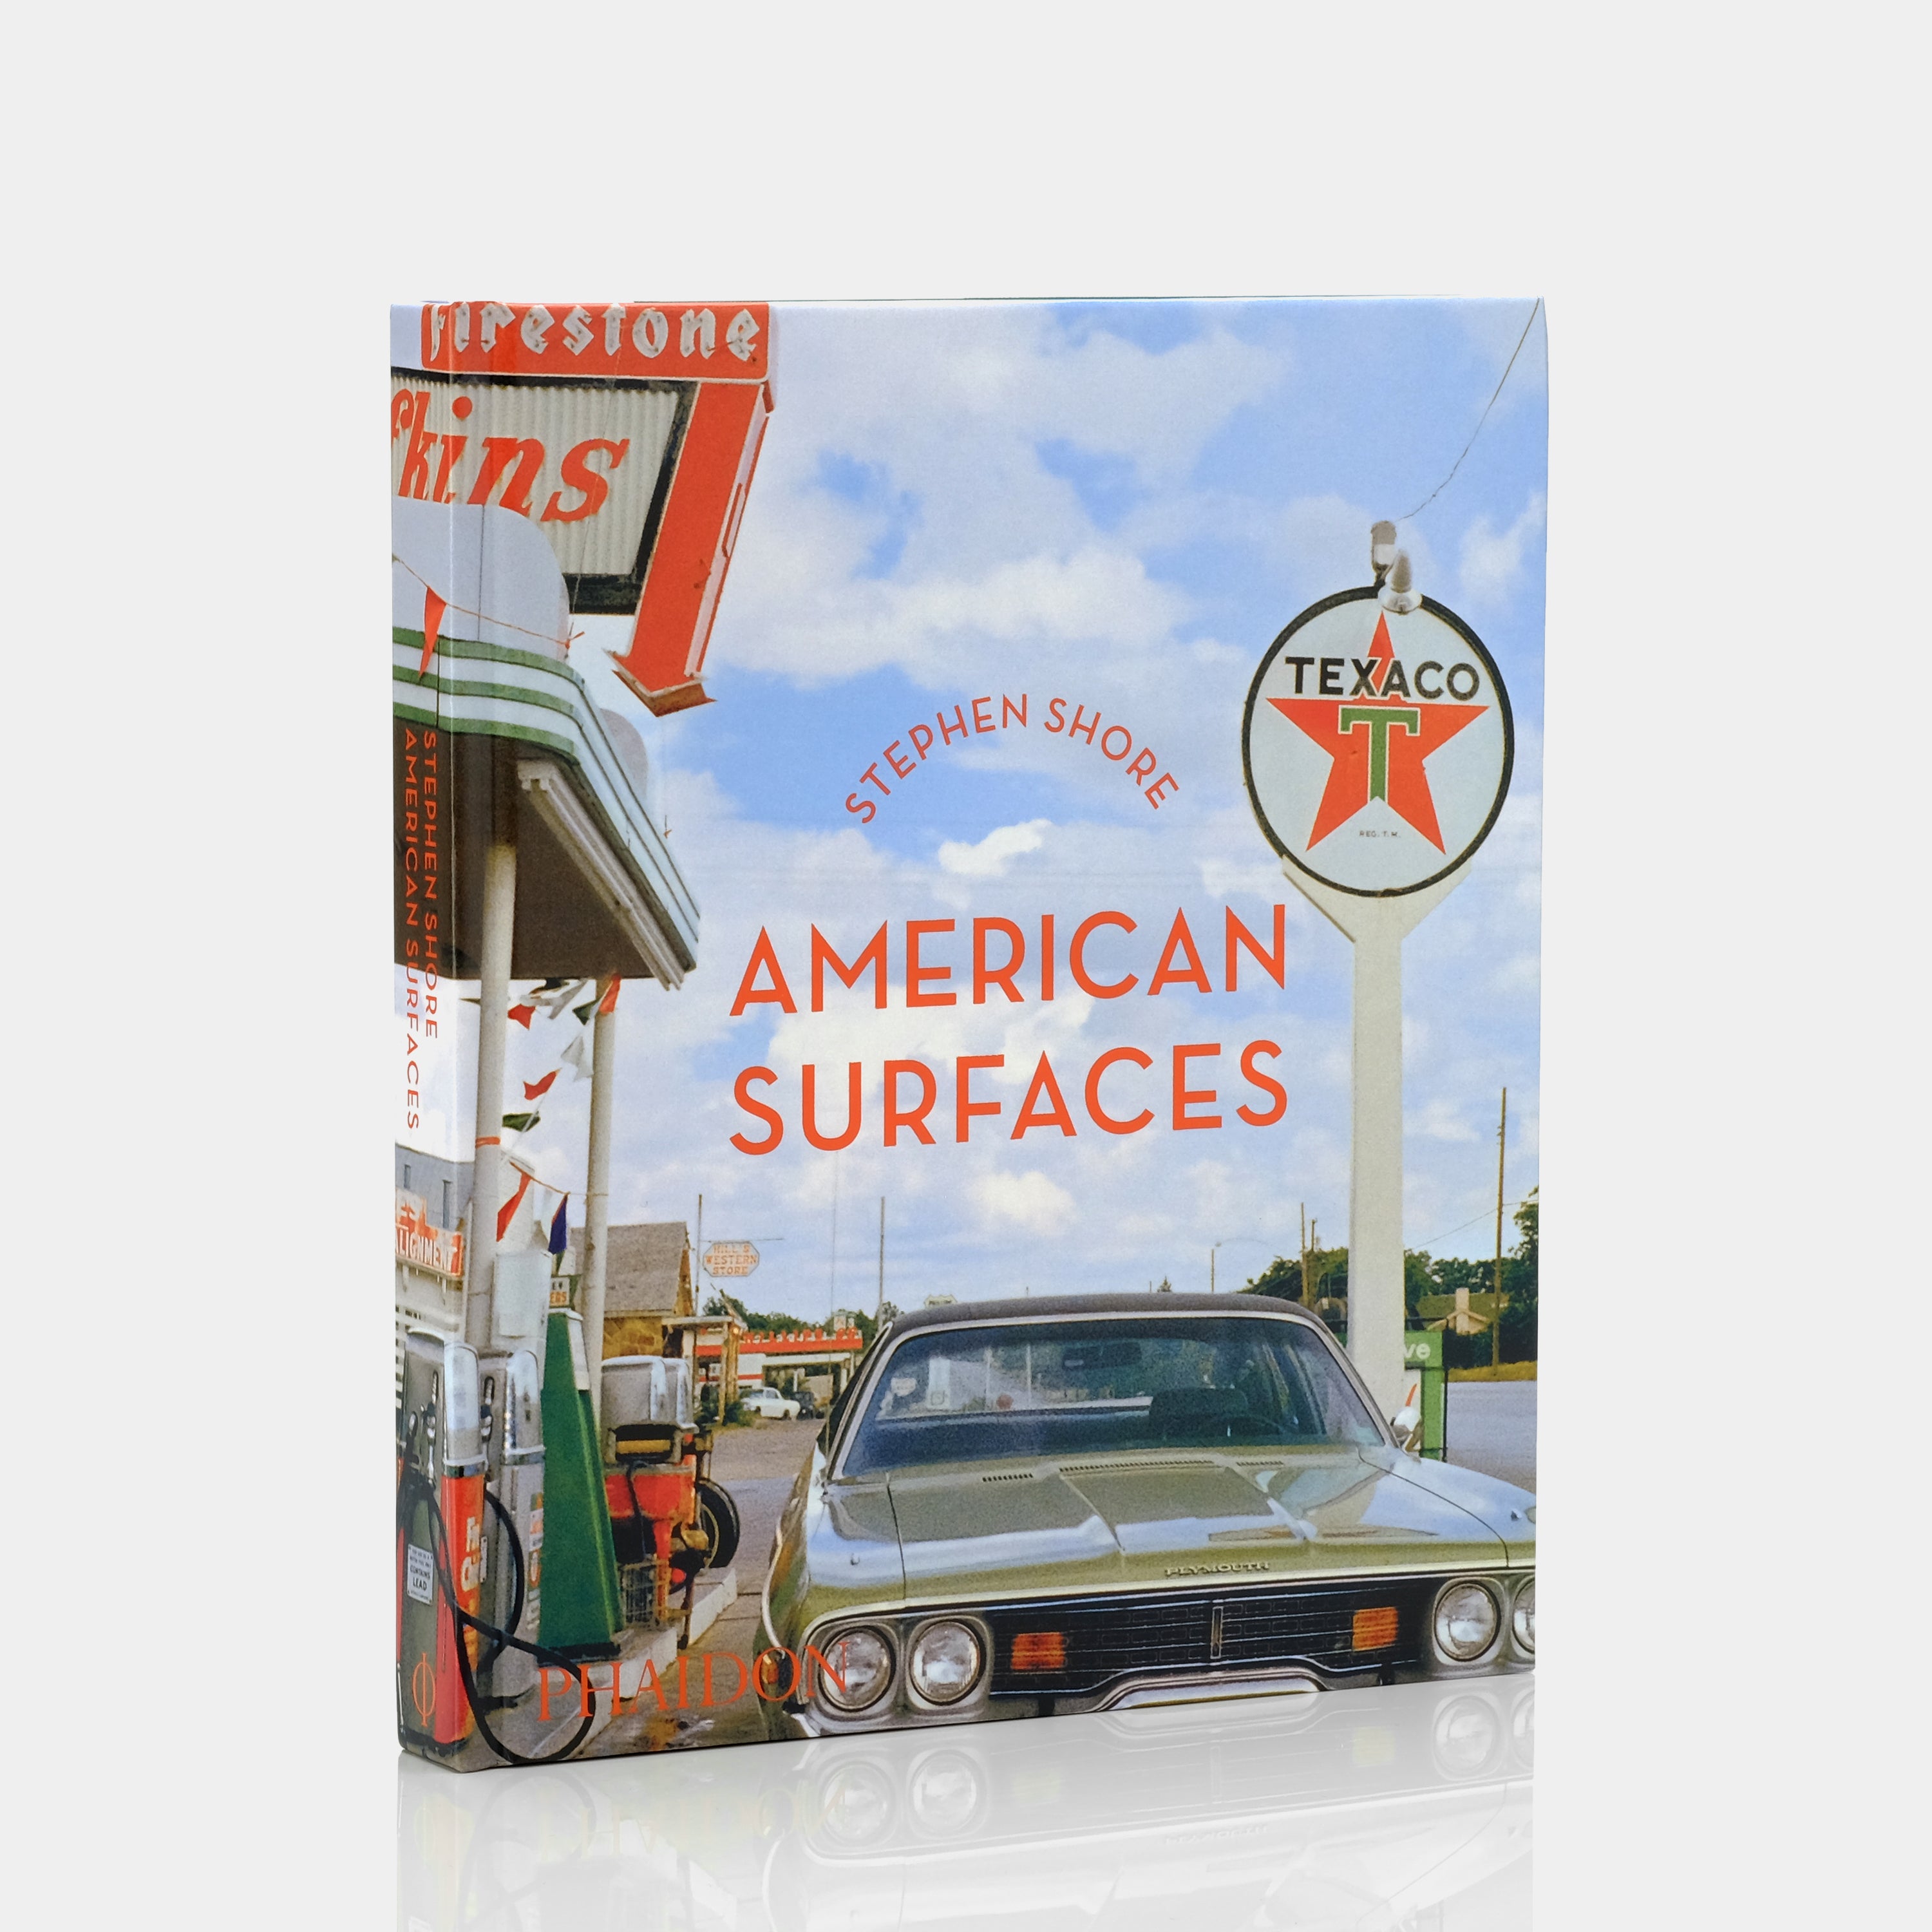 Stephen Shore: American Surfaces Phaidon Book